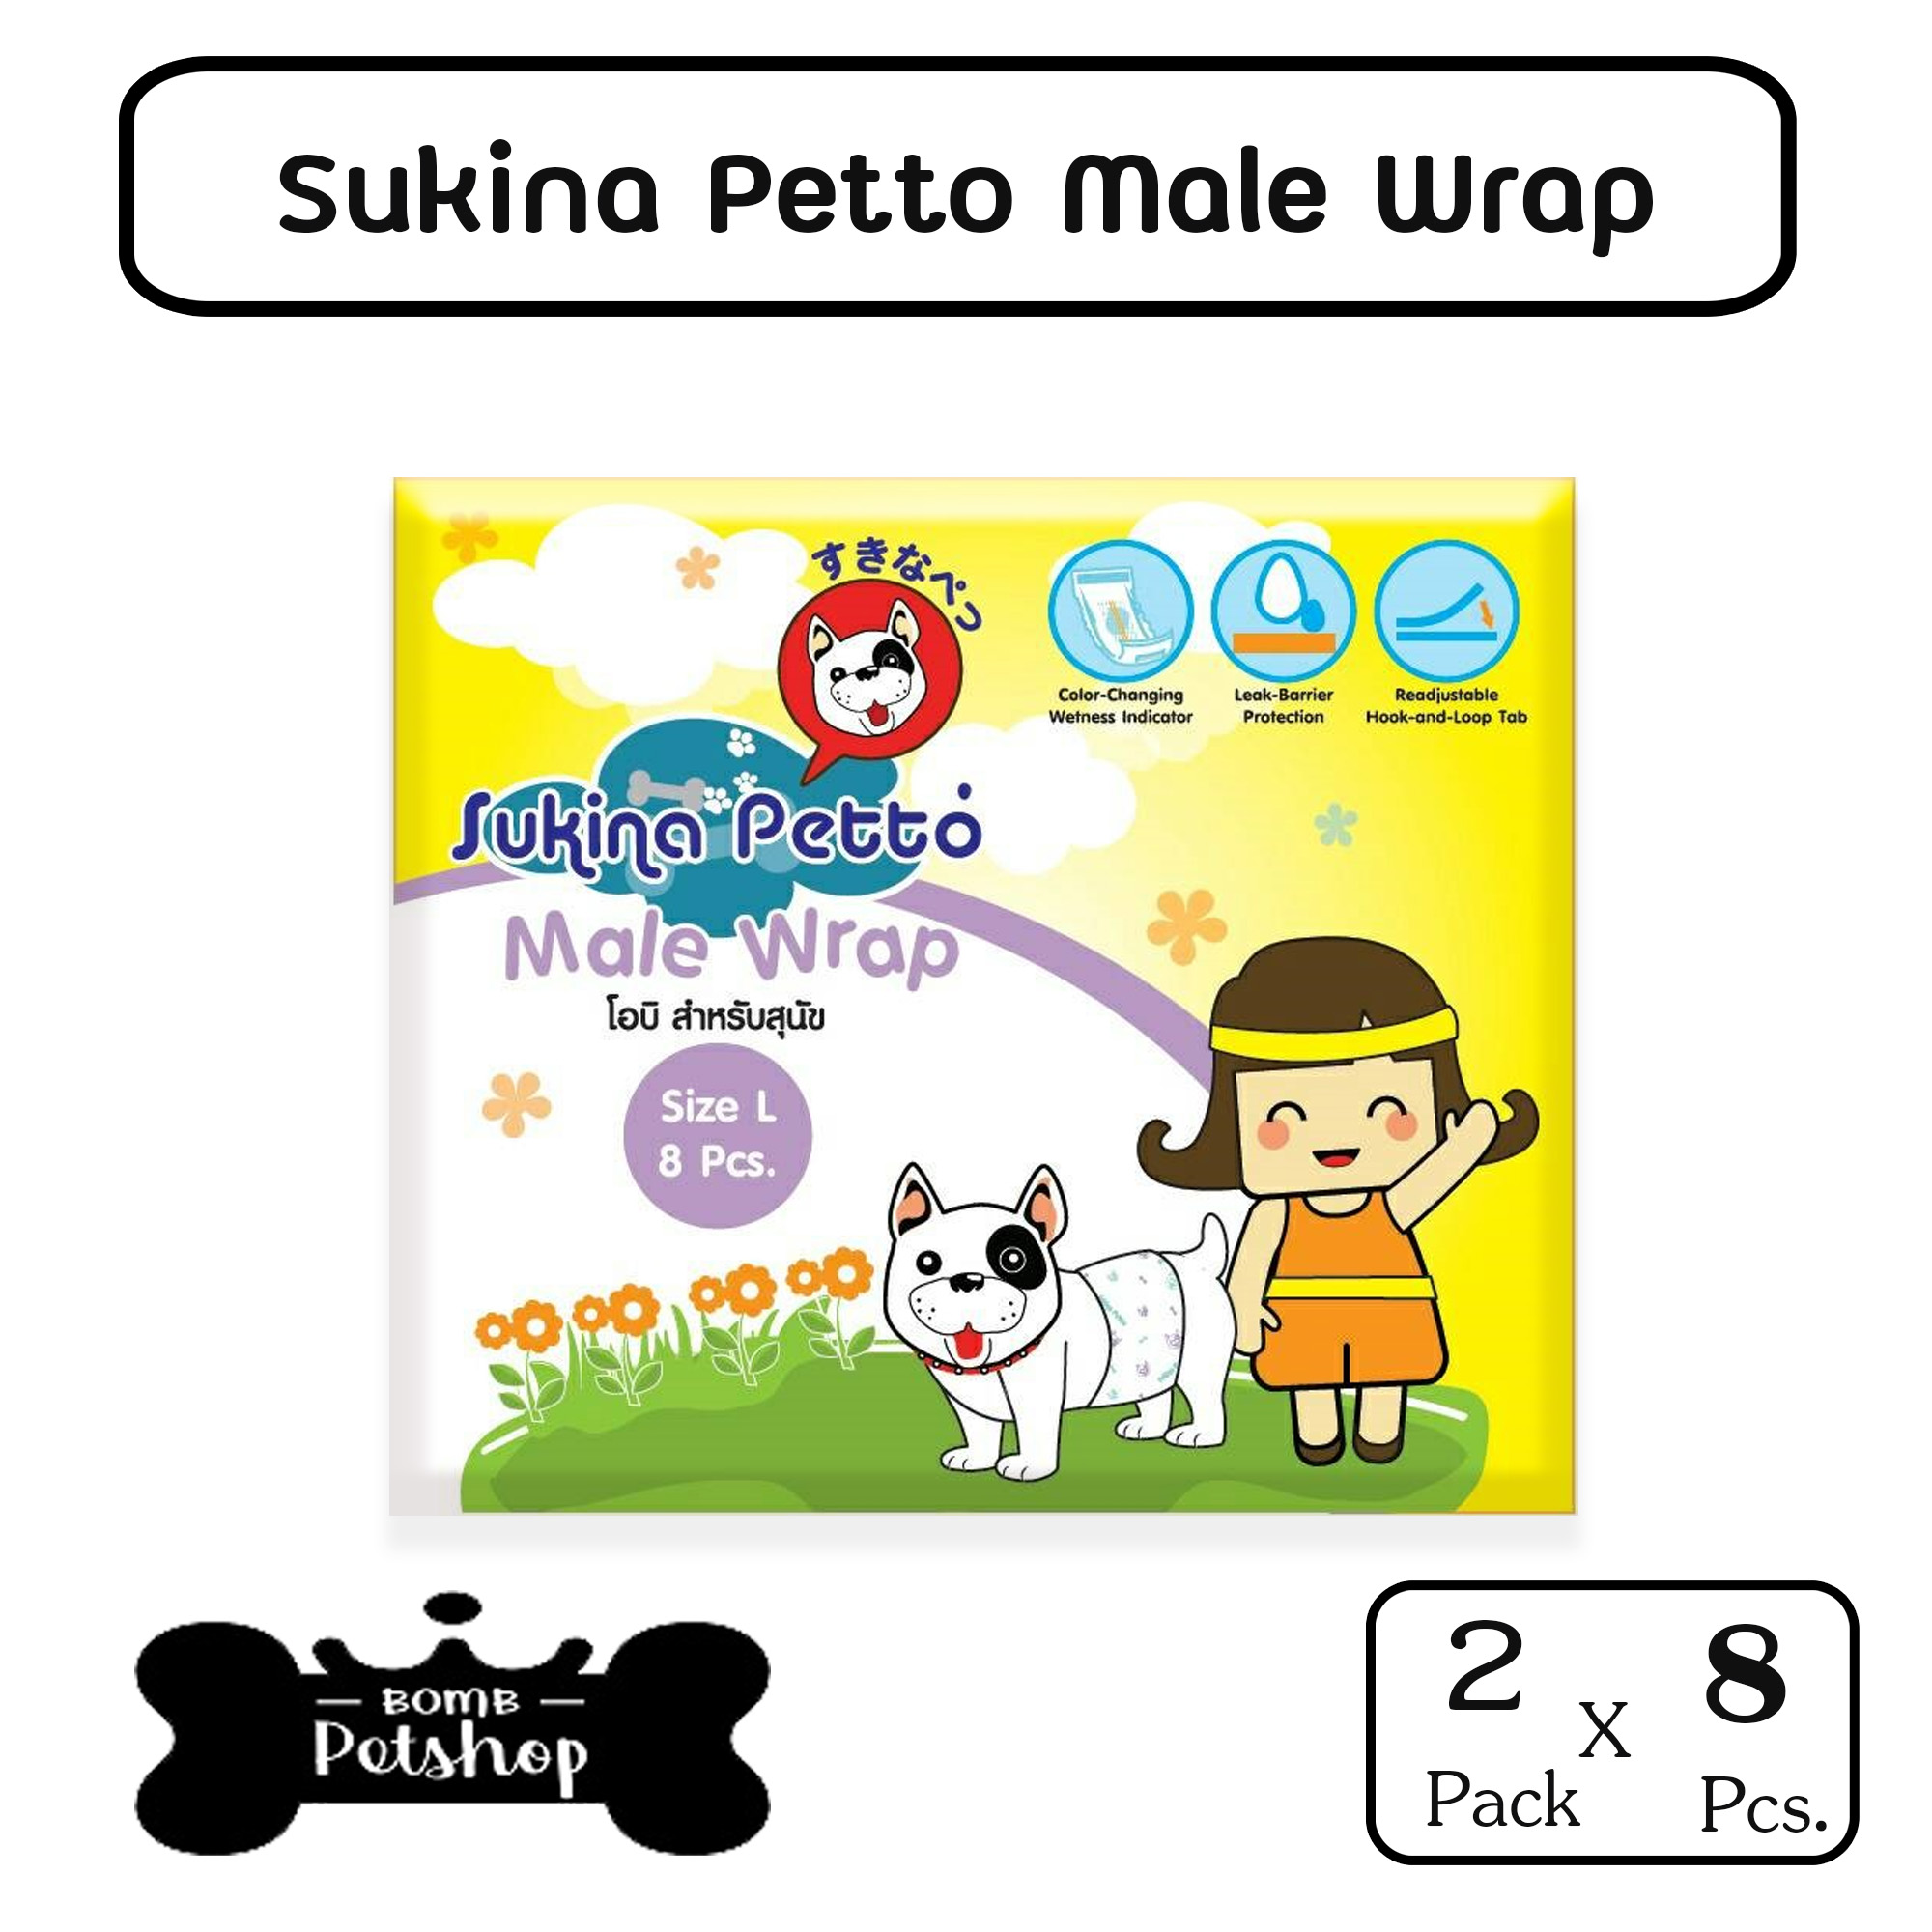 Sukina Petto Male Wrap โอบิ สำหรับสุนัข ขนาด L  8 ชิ้น x 2 ห่อ